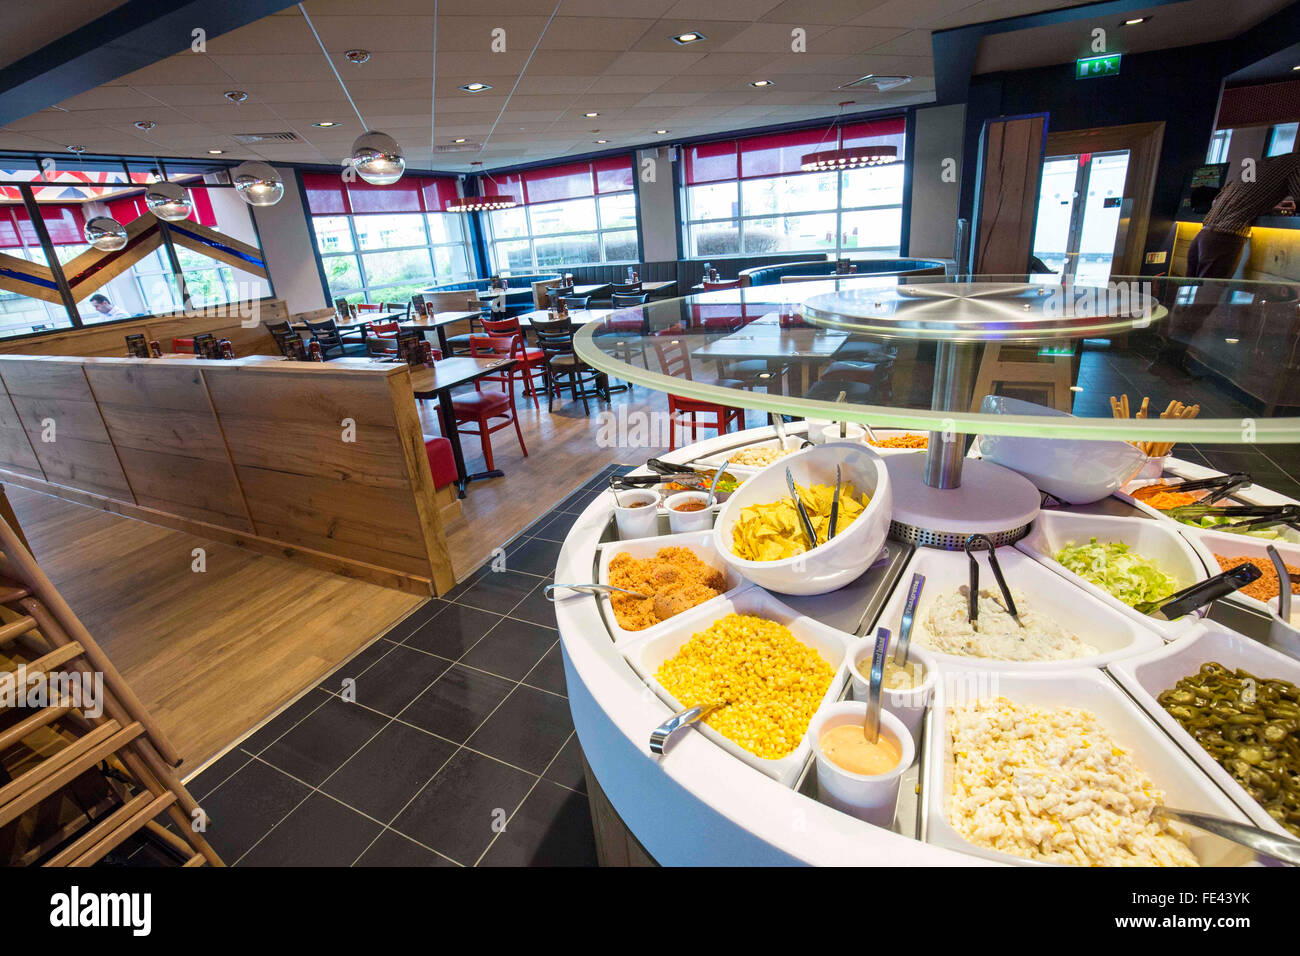 Pizza Hut restaurant Stock Photo - Alamy